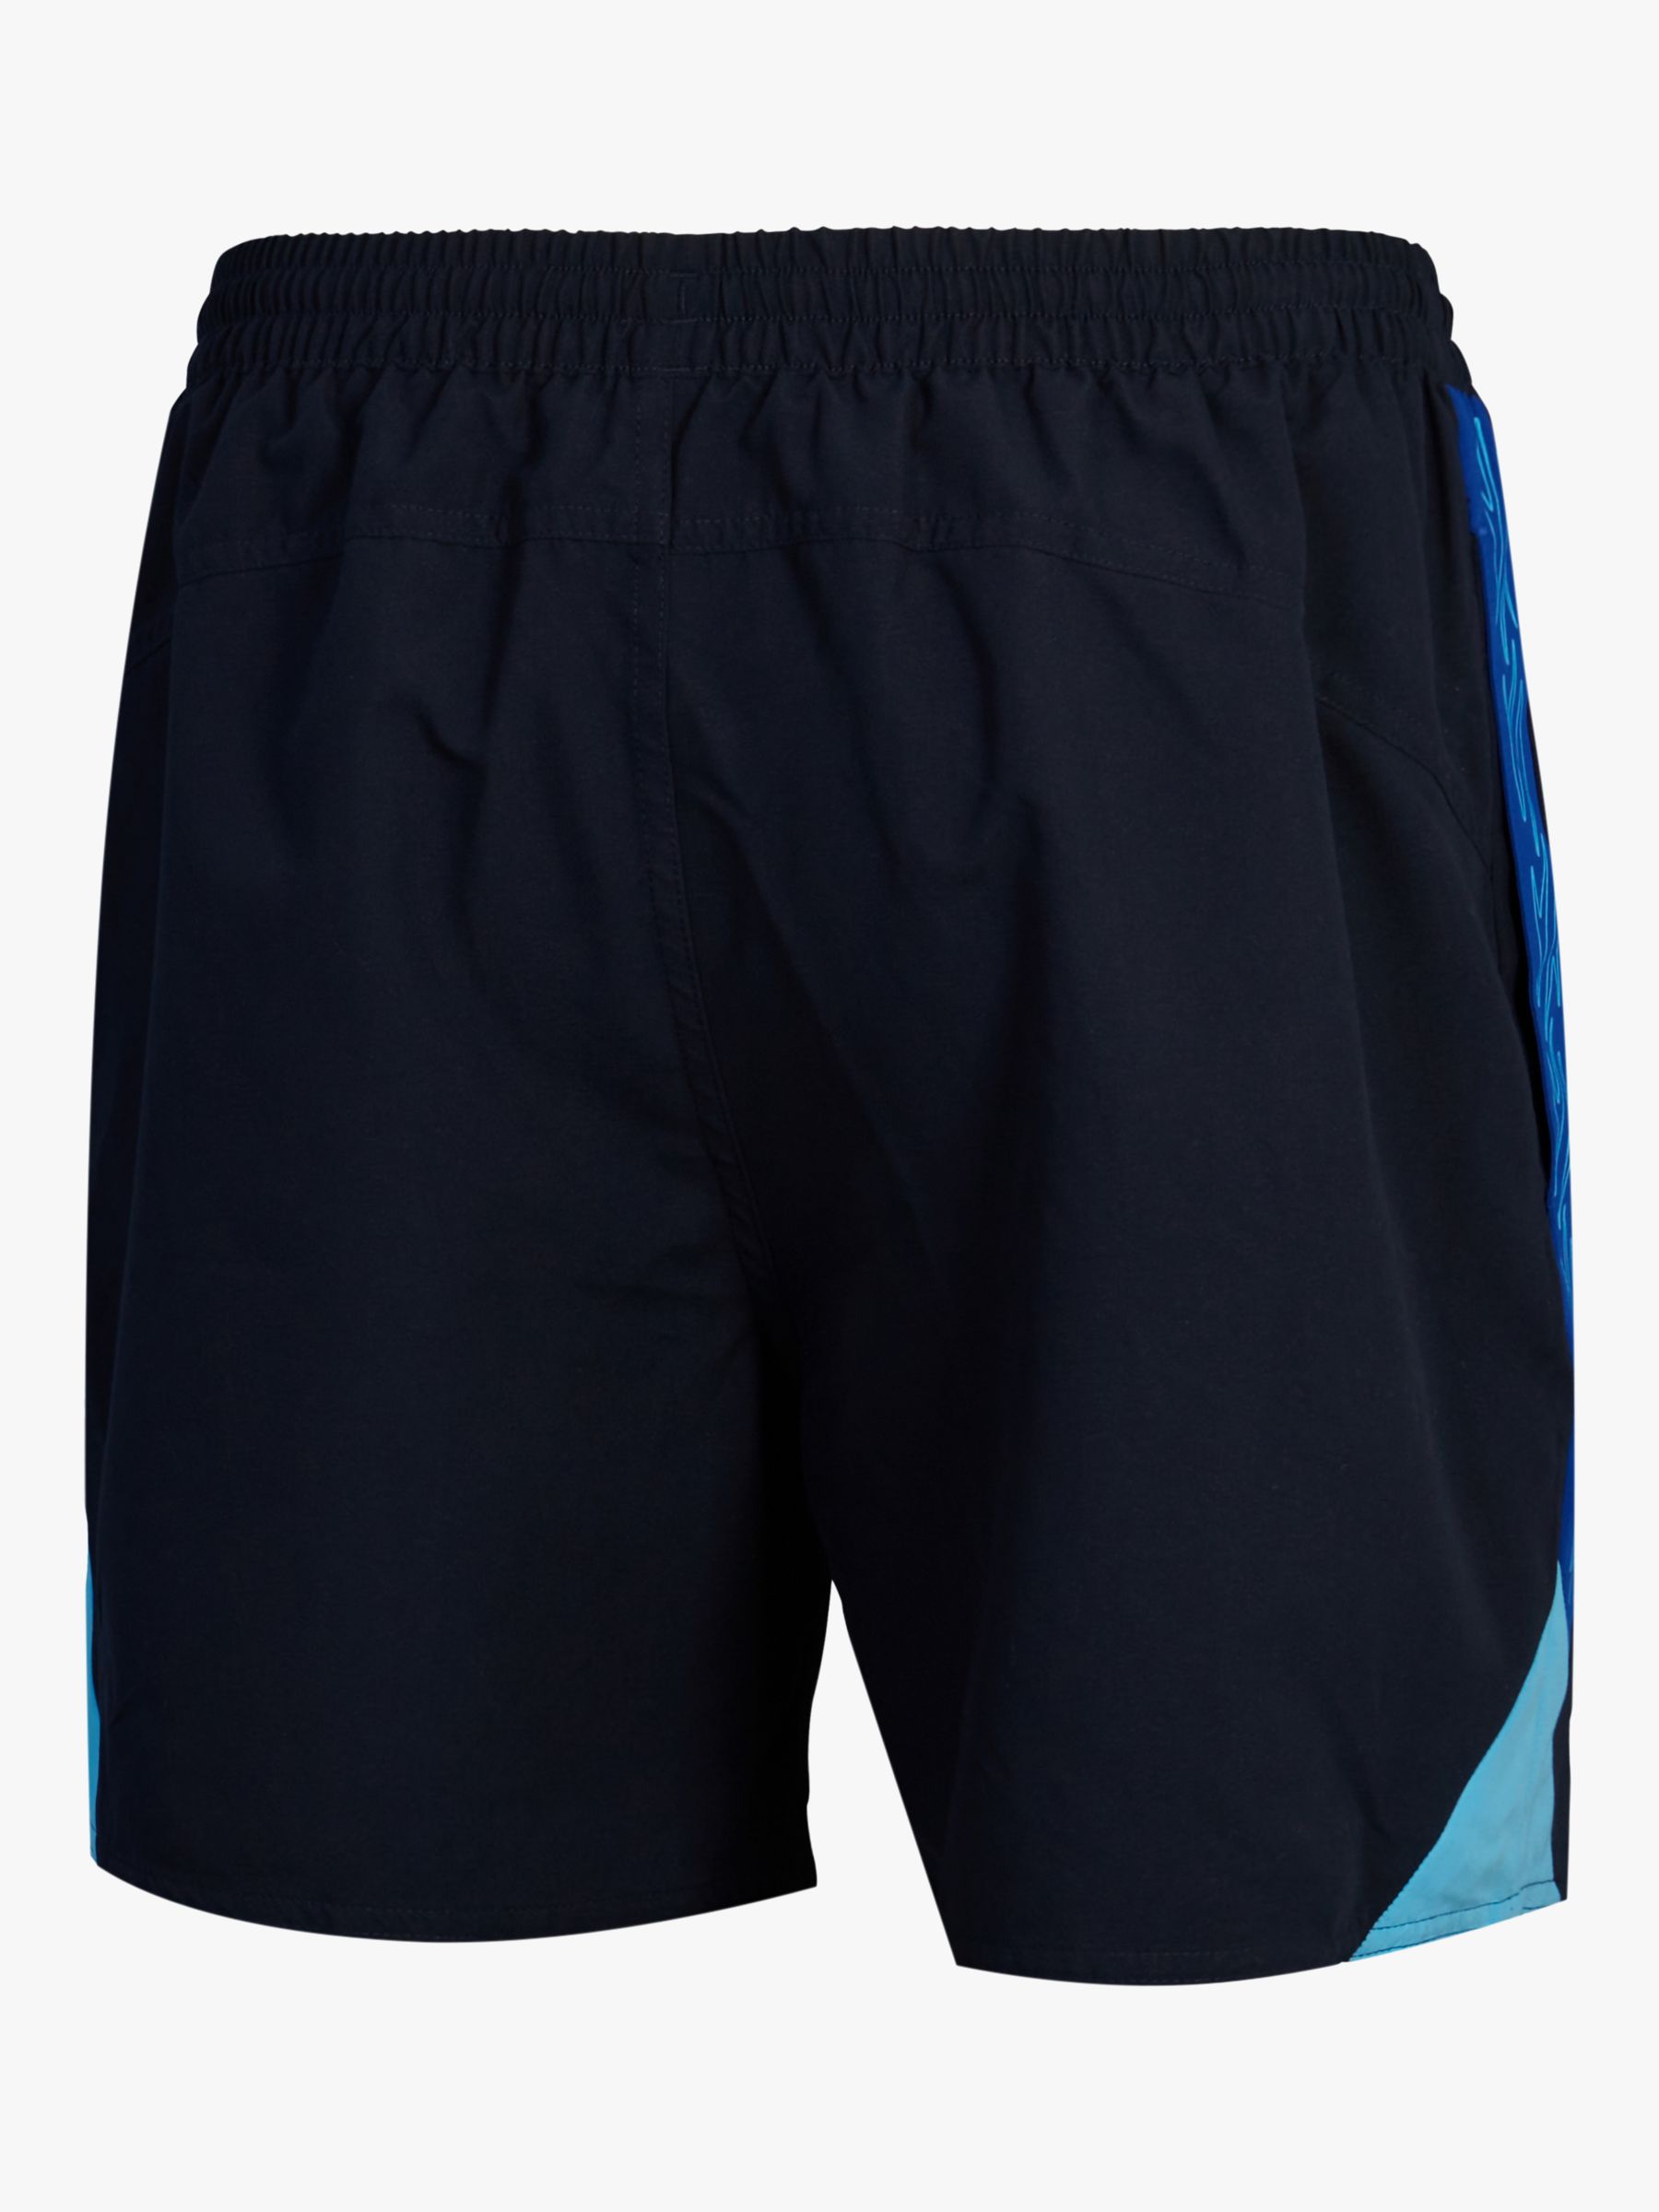 Speedo Hyper Boom Splice Water Shorts, Navy, M